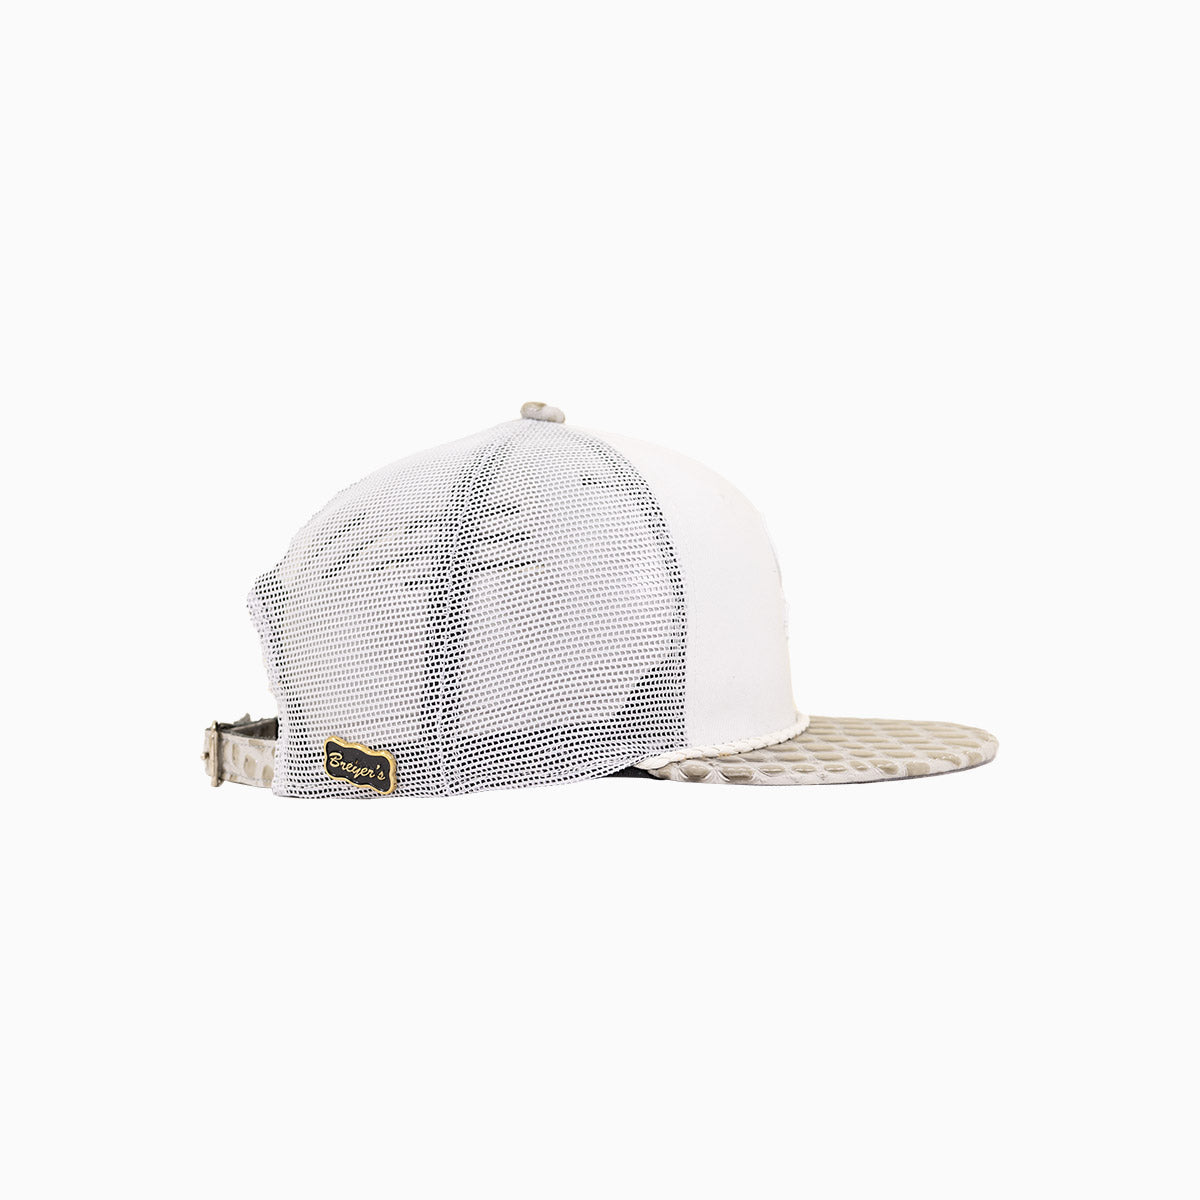 Breyer's Buck 50 Chicago White Sox Trucker Hat With Leather Visor